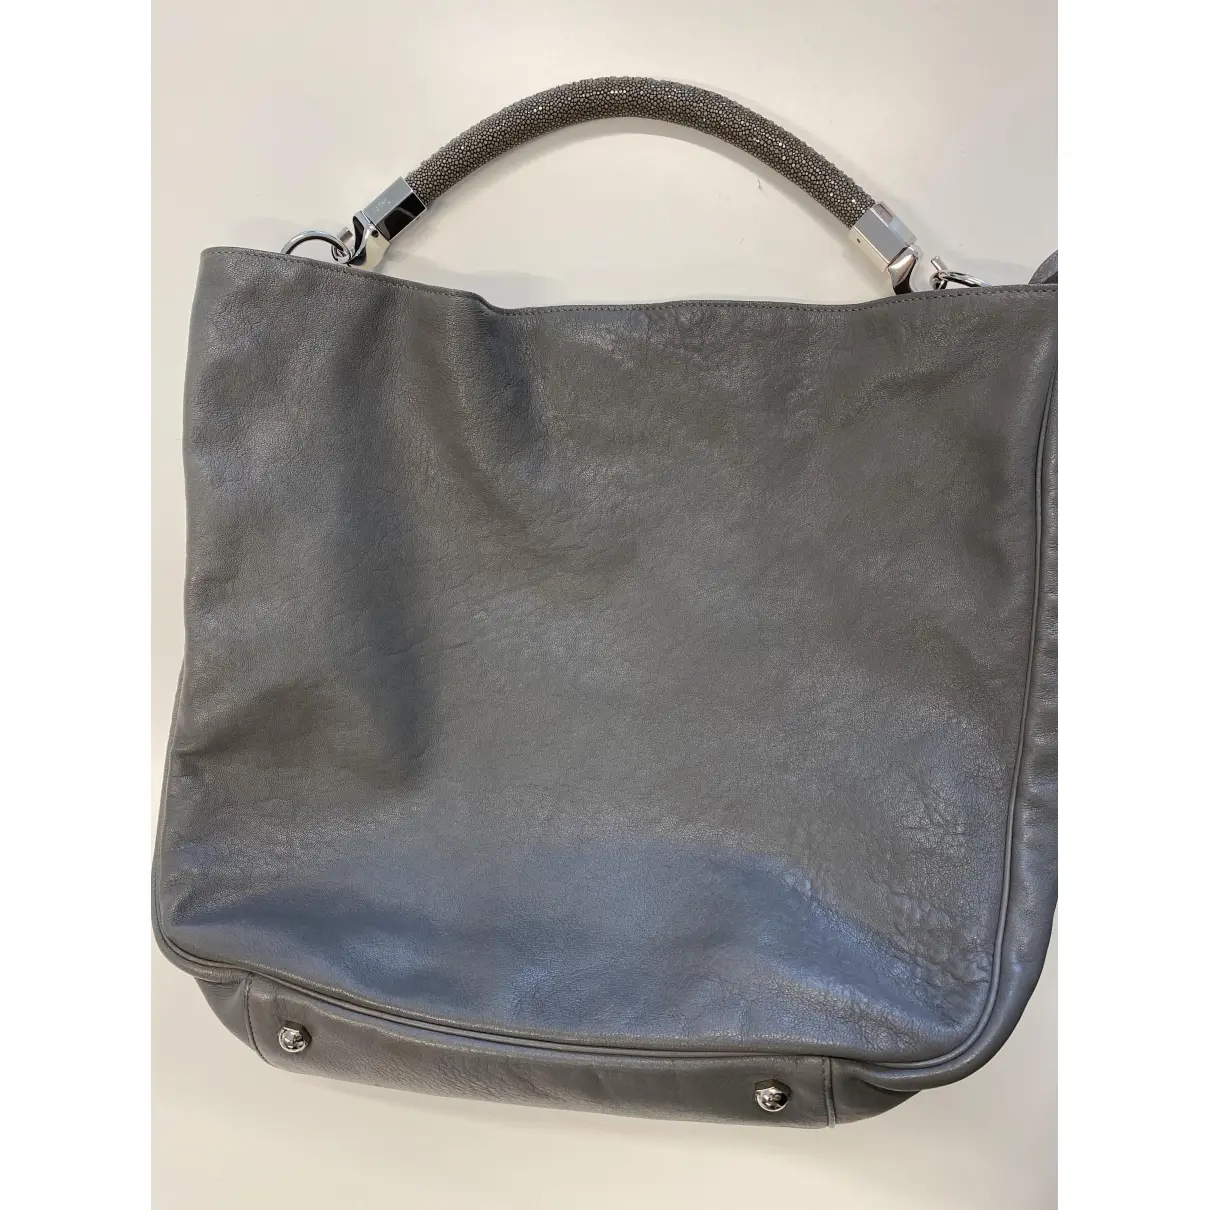 Buy Yves Saint Laurent Roady leather handbag online